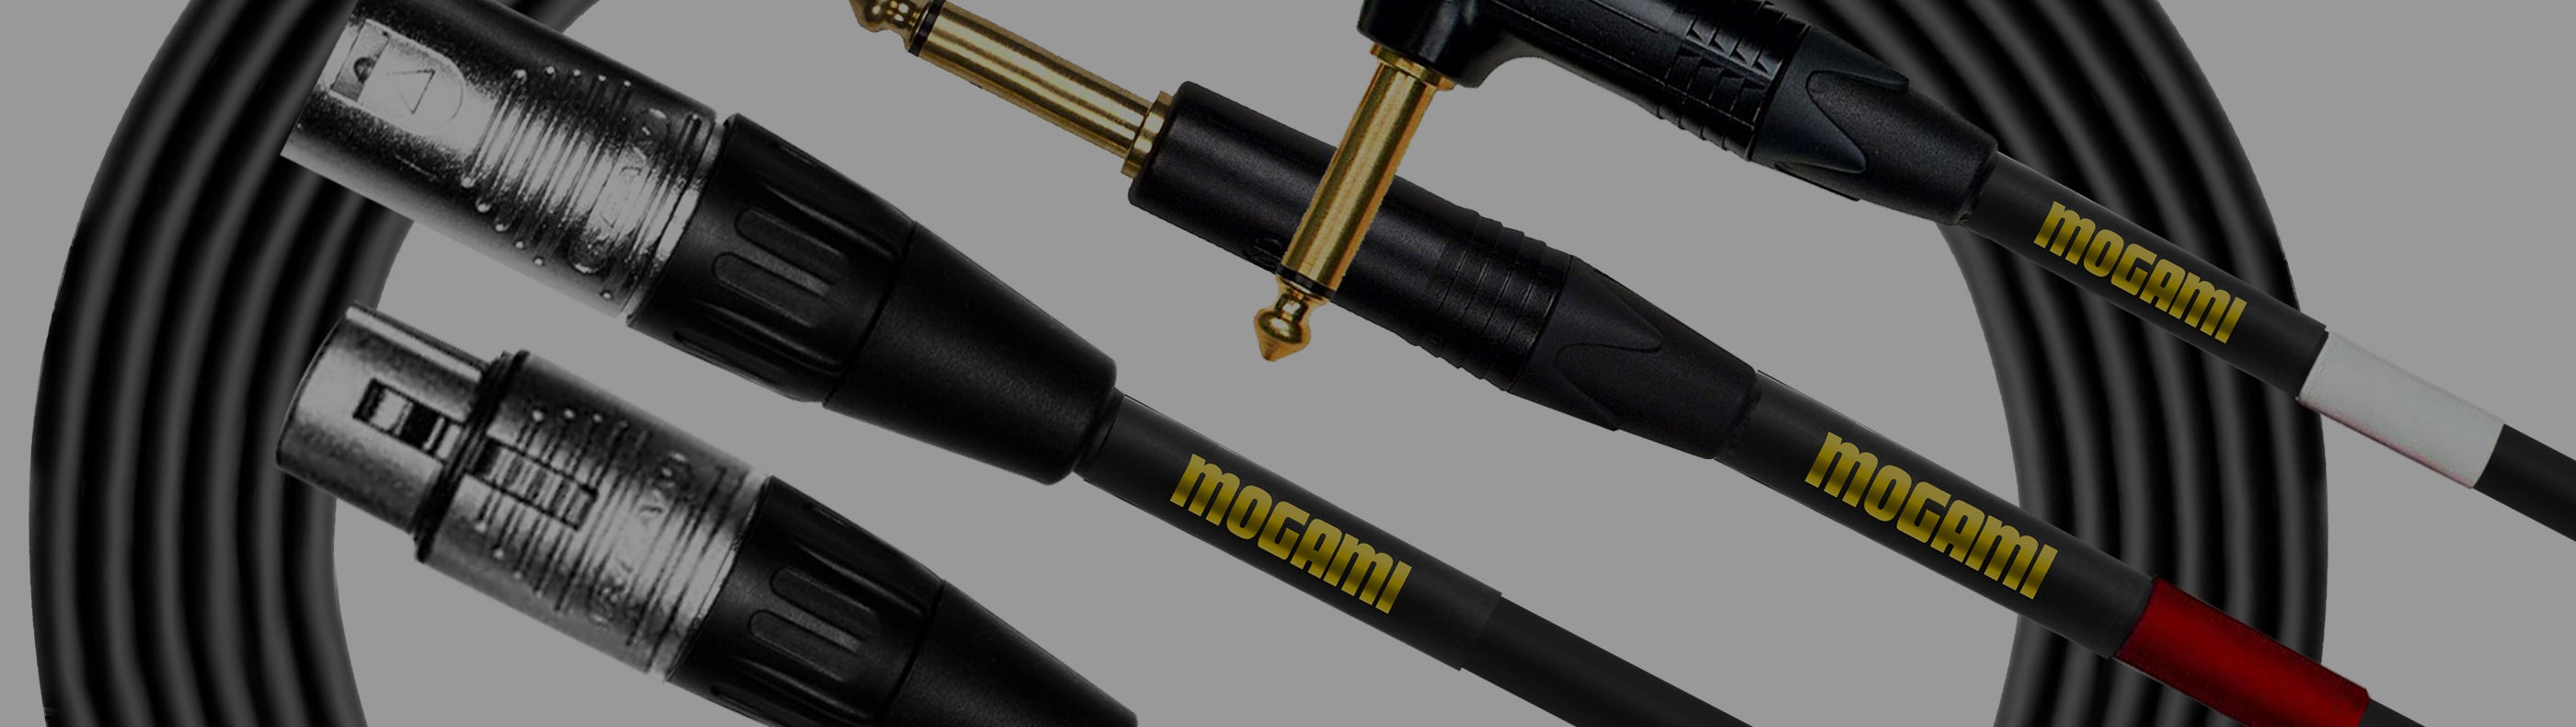 Mogami Pro Audio Cables